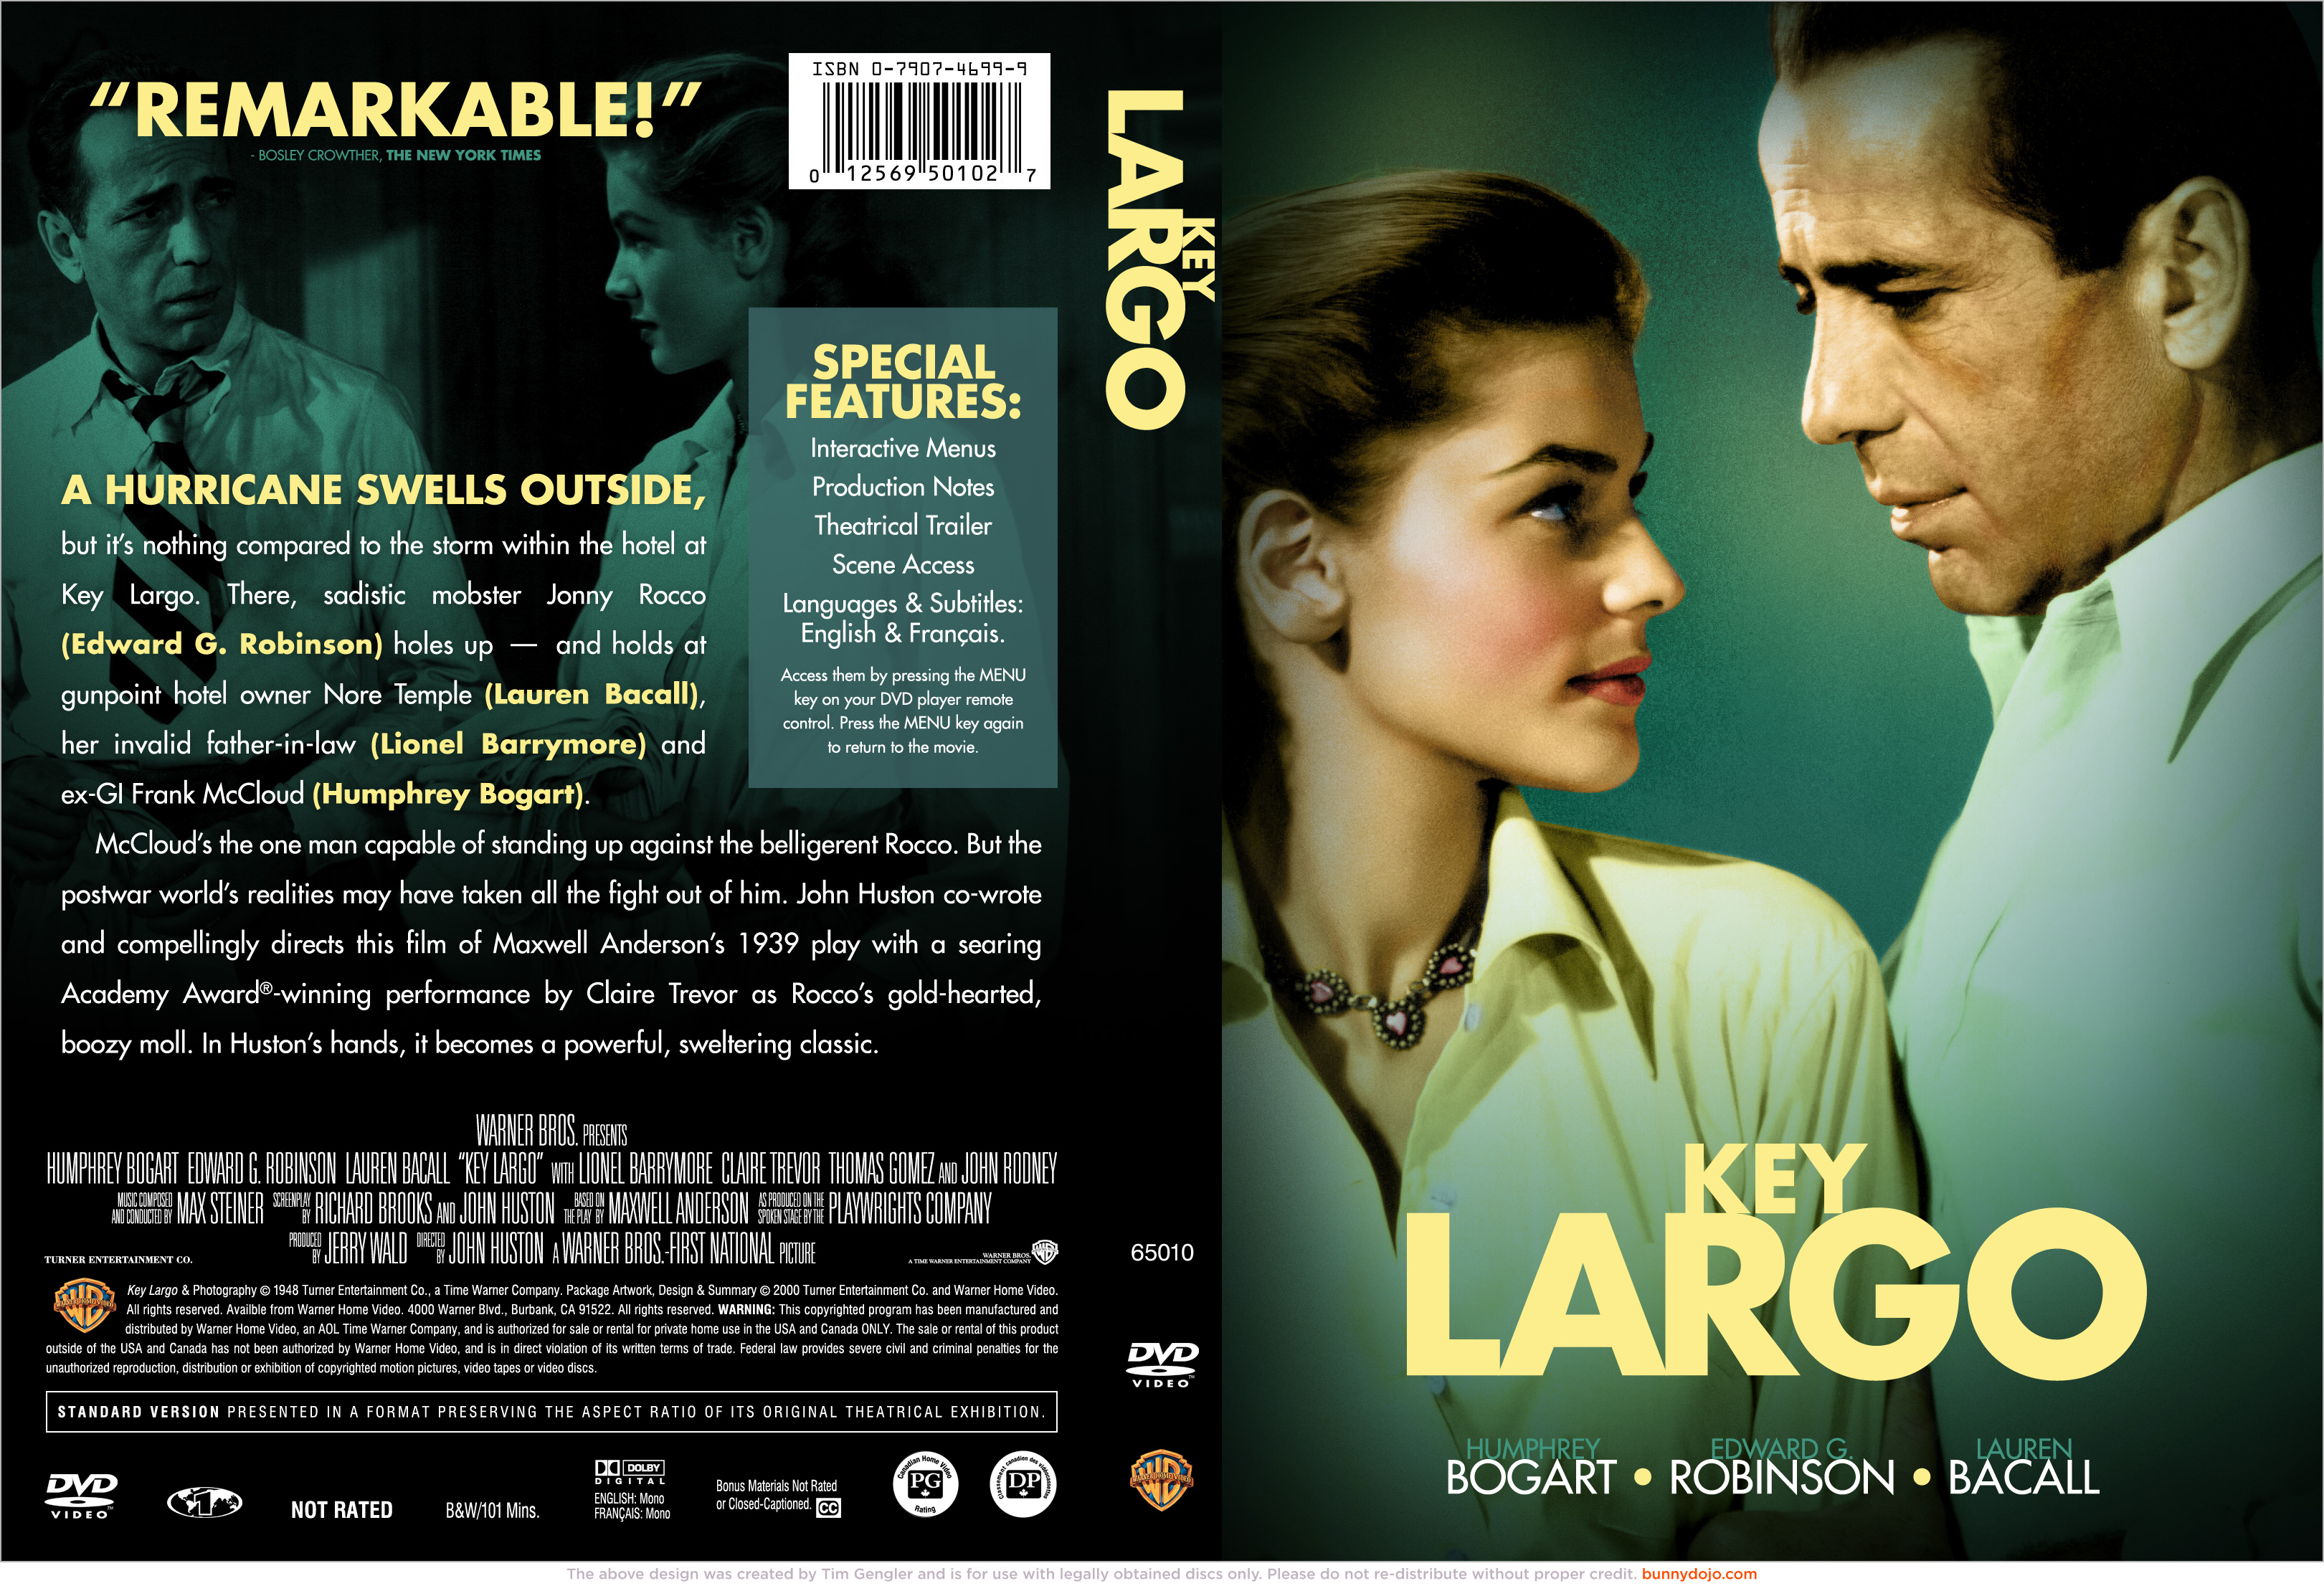 Jaquette DVD Key Largo custom